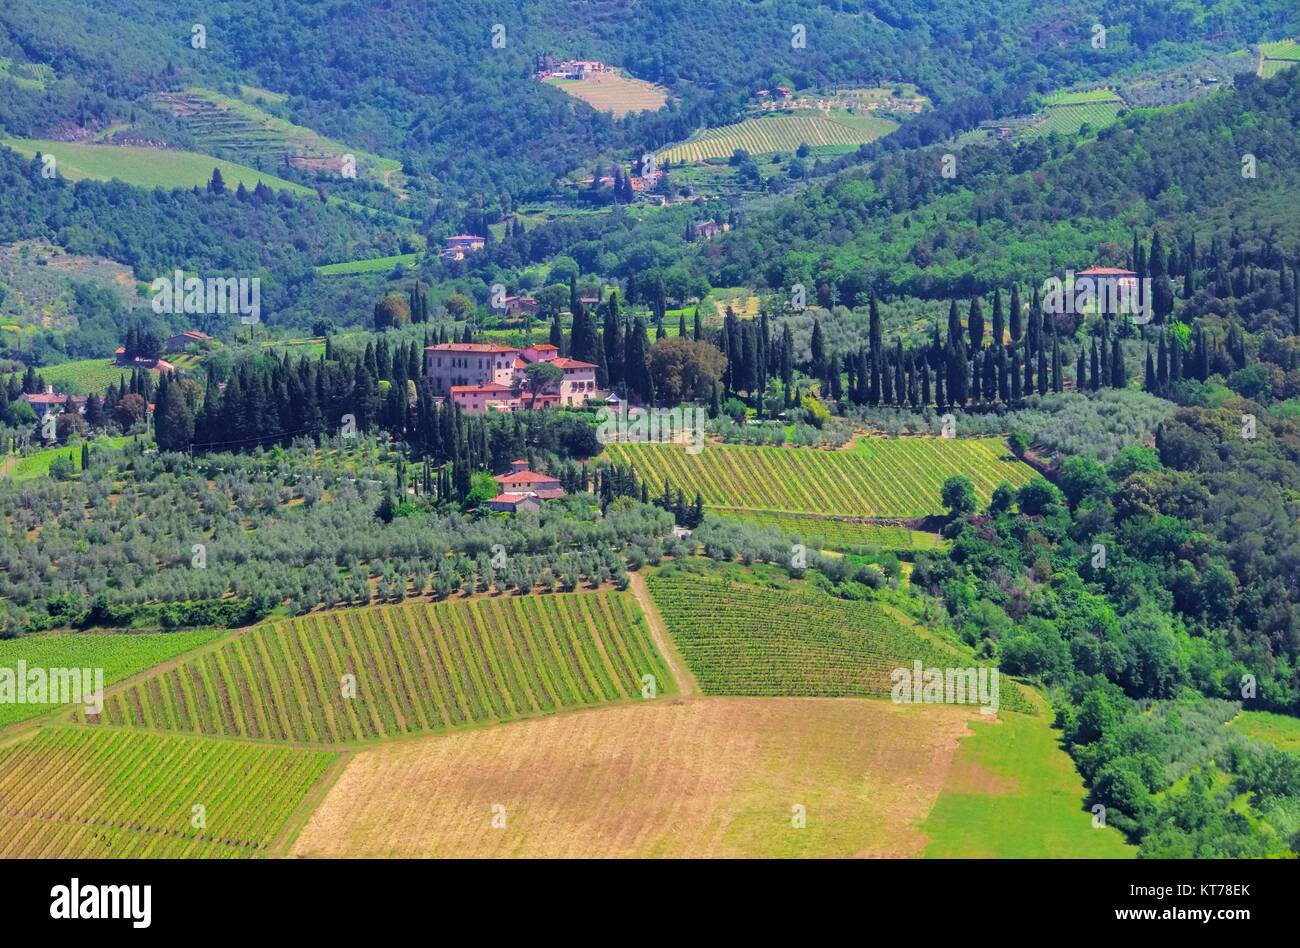 Toskana Weingut in lieblicher Landschaft - Tuscany, ancient winery in beautiful landscape Stock Photo